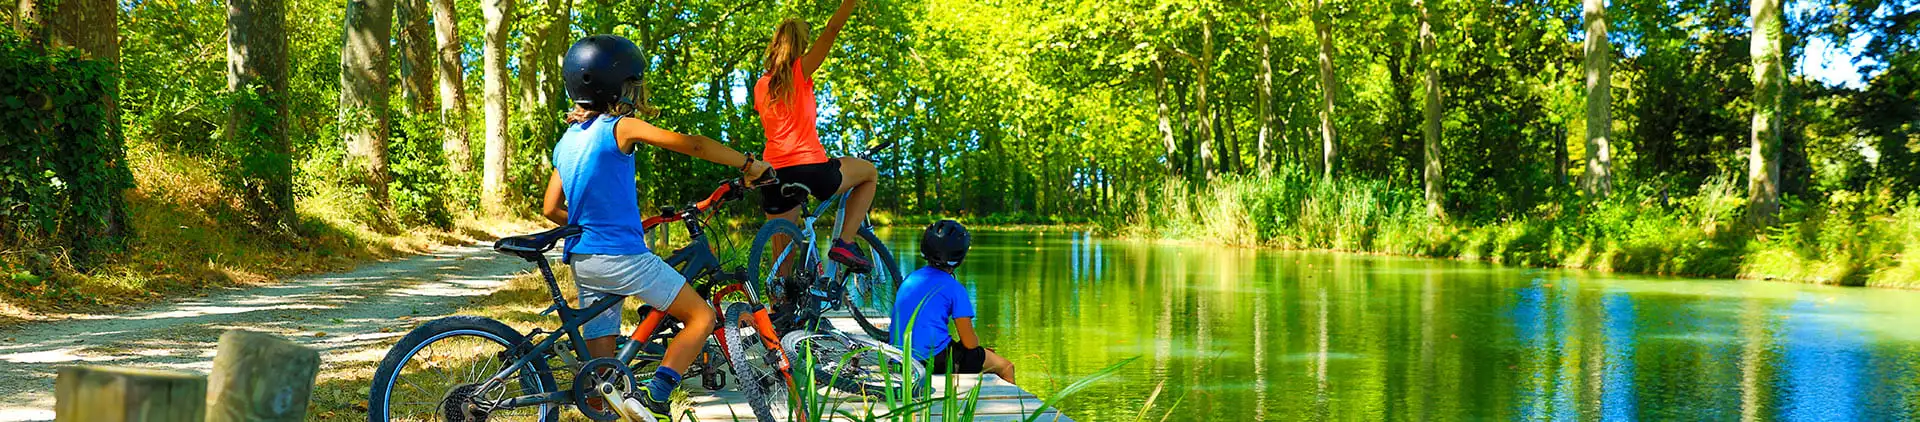 Descubra el Canal du Midi en bicicleta, partiendo del camping l'Escale Occitane en el Aude